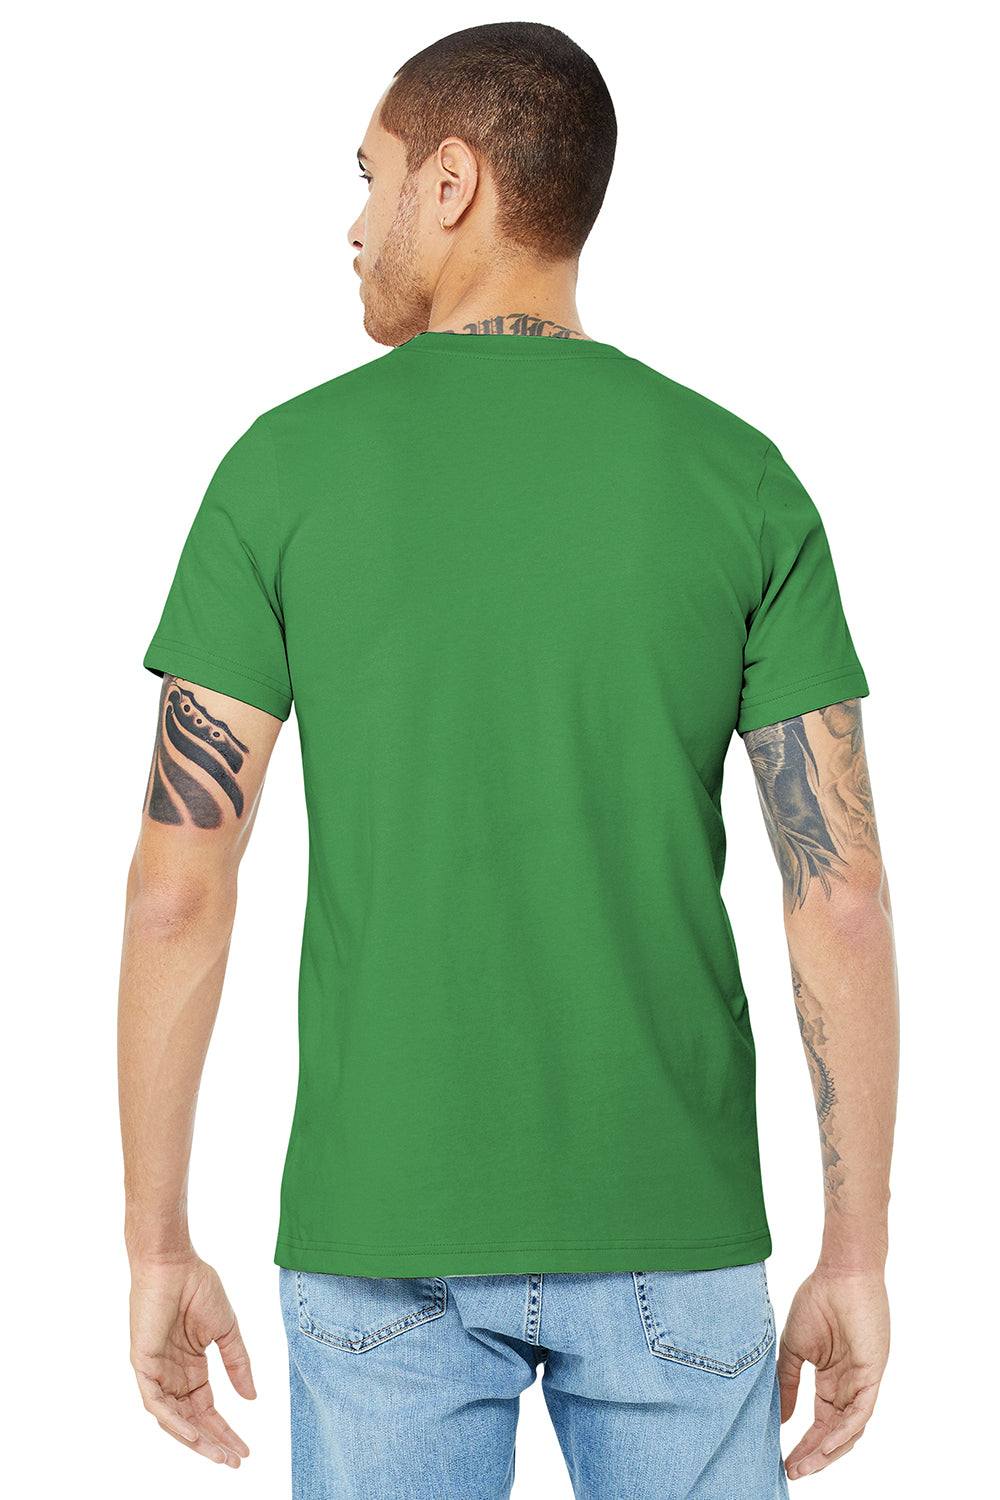 Bella + Canvas BC3001/3001C Mens Jersey Short Sleeve Crewneck T-Shirt Leaf Green Model Back